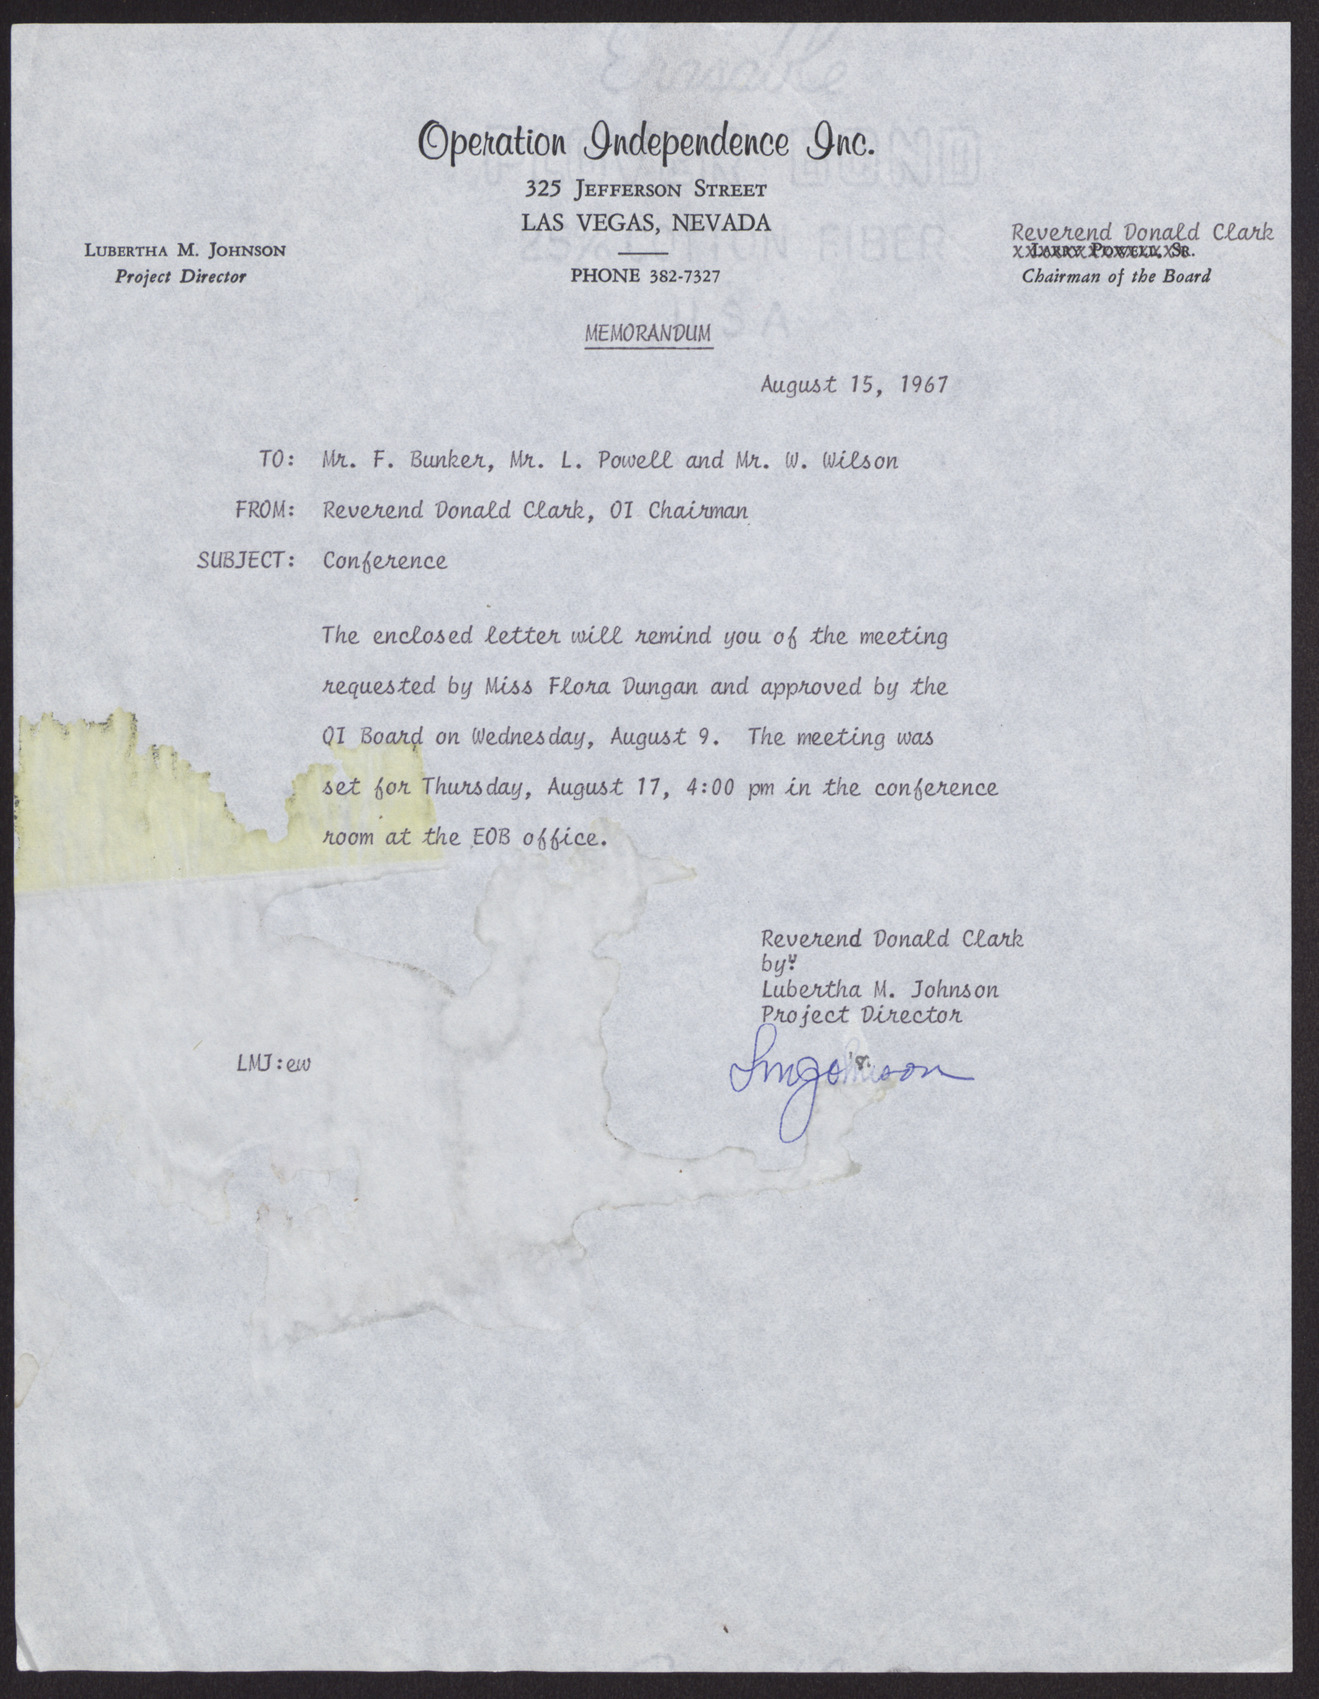 Memorandum to Mr. F. Bunker, Mr. L. Powell and Mr. W. Wilson from Reverend Donald Clark, August 15, 1967